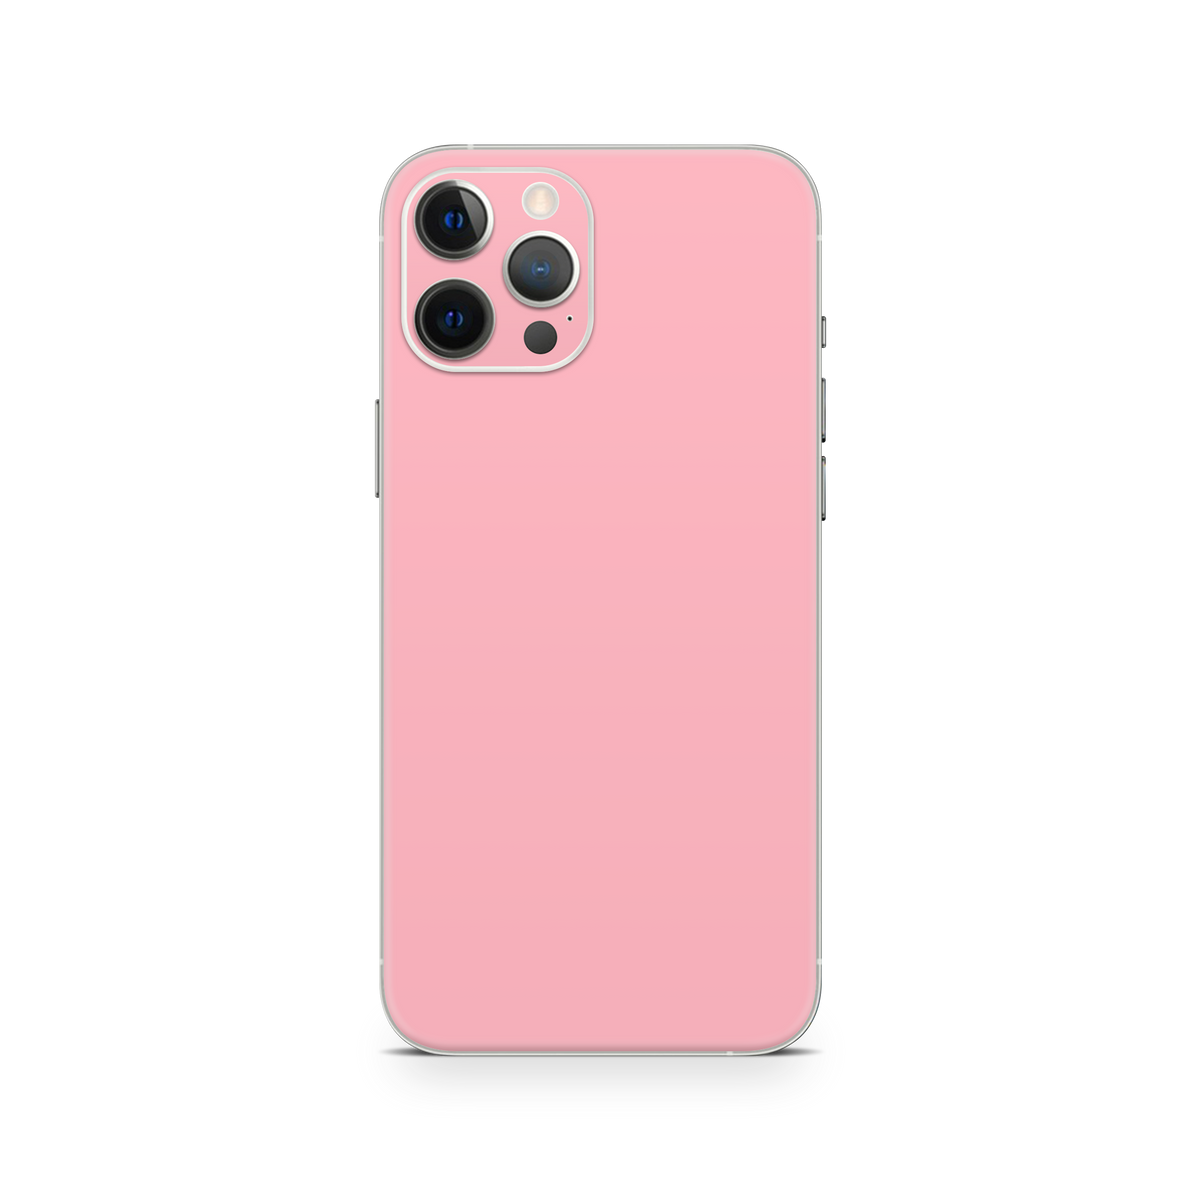 Apple iPhone 12 Pro max Pastel Pink Skin